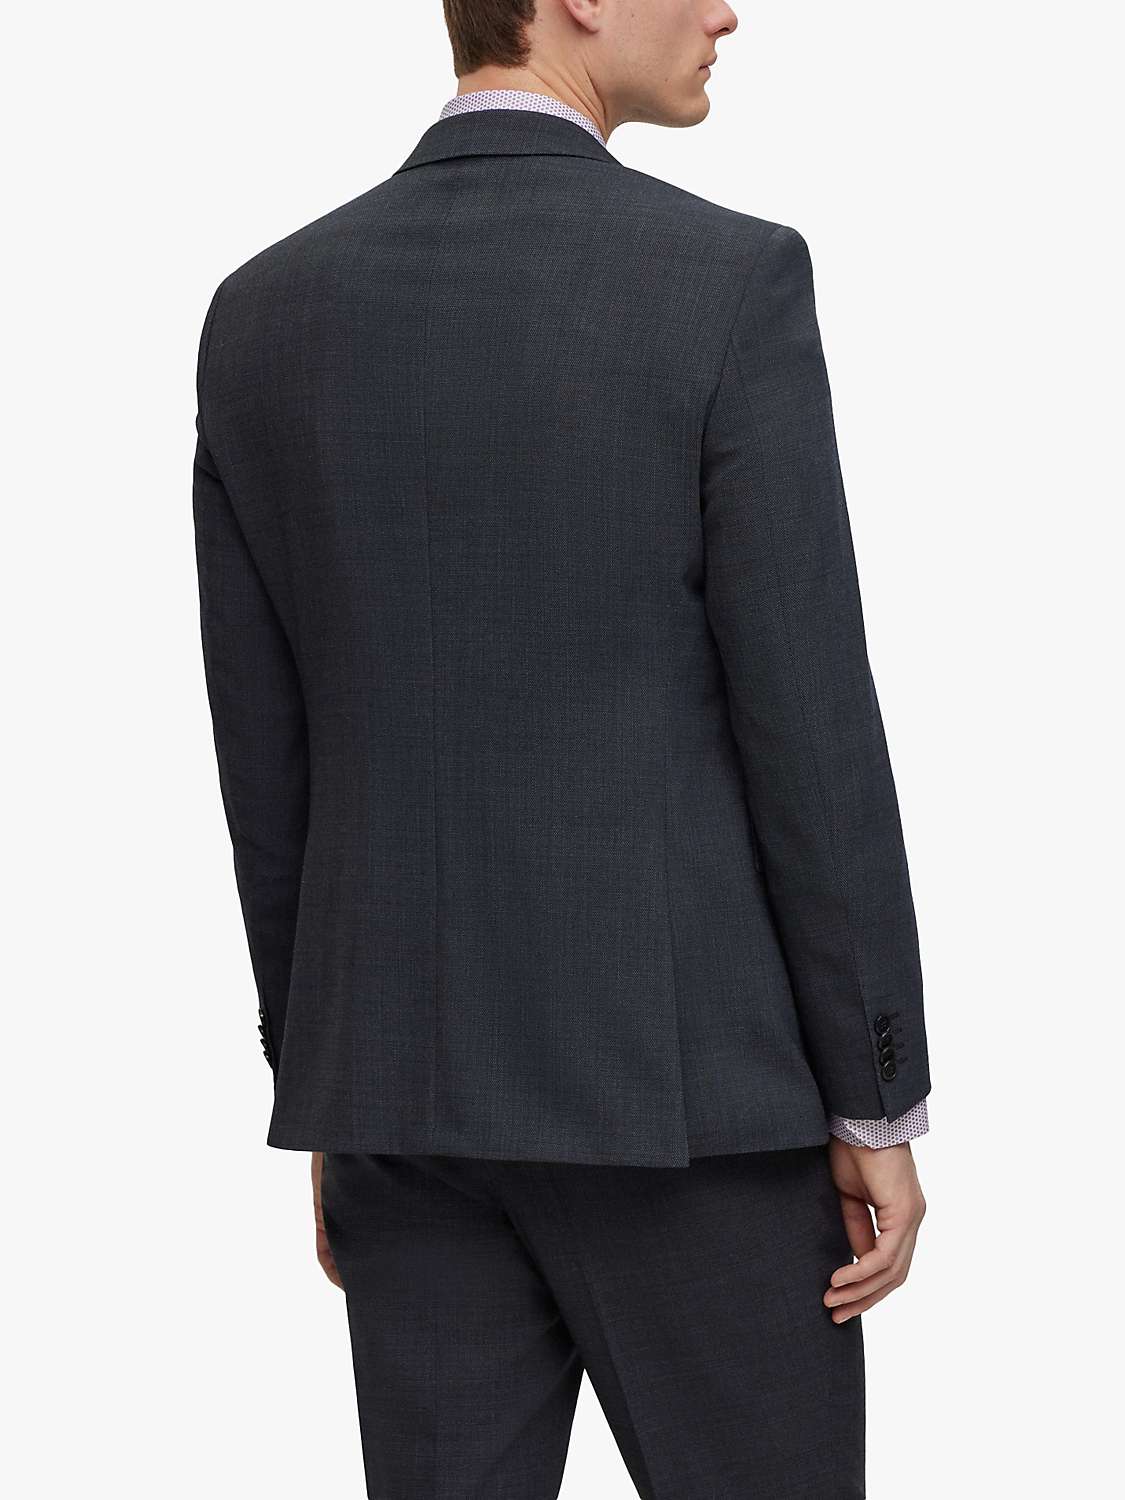 HUGO BOSS Jasper Wool Blend Suit Jacket, Open Grey at John Lewis & Partners